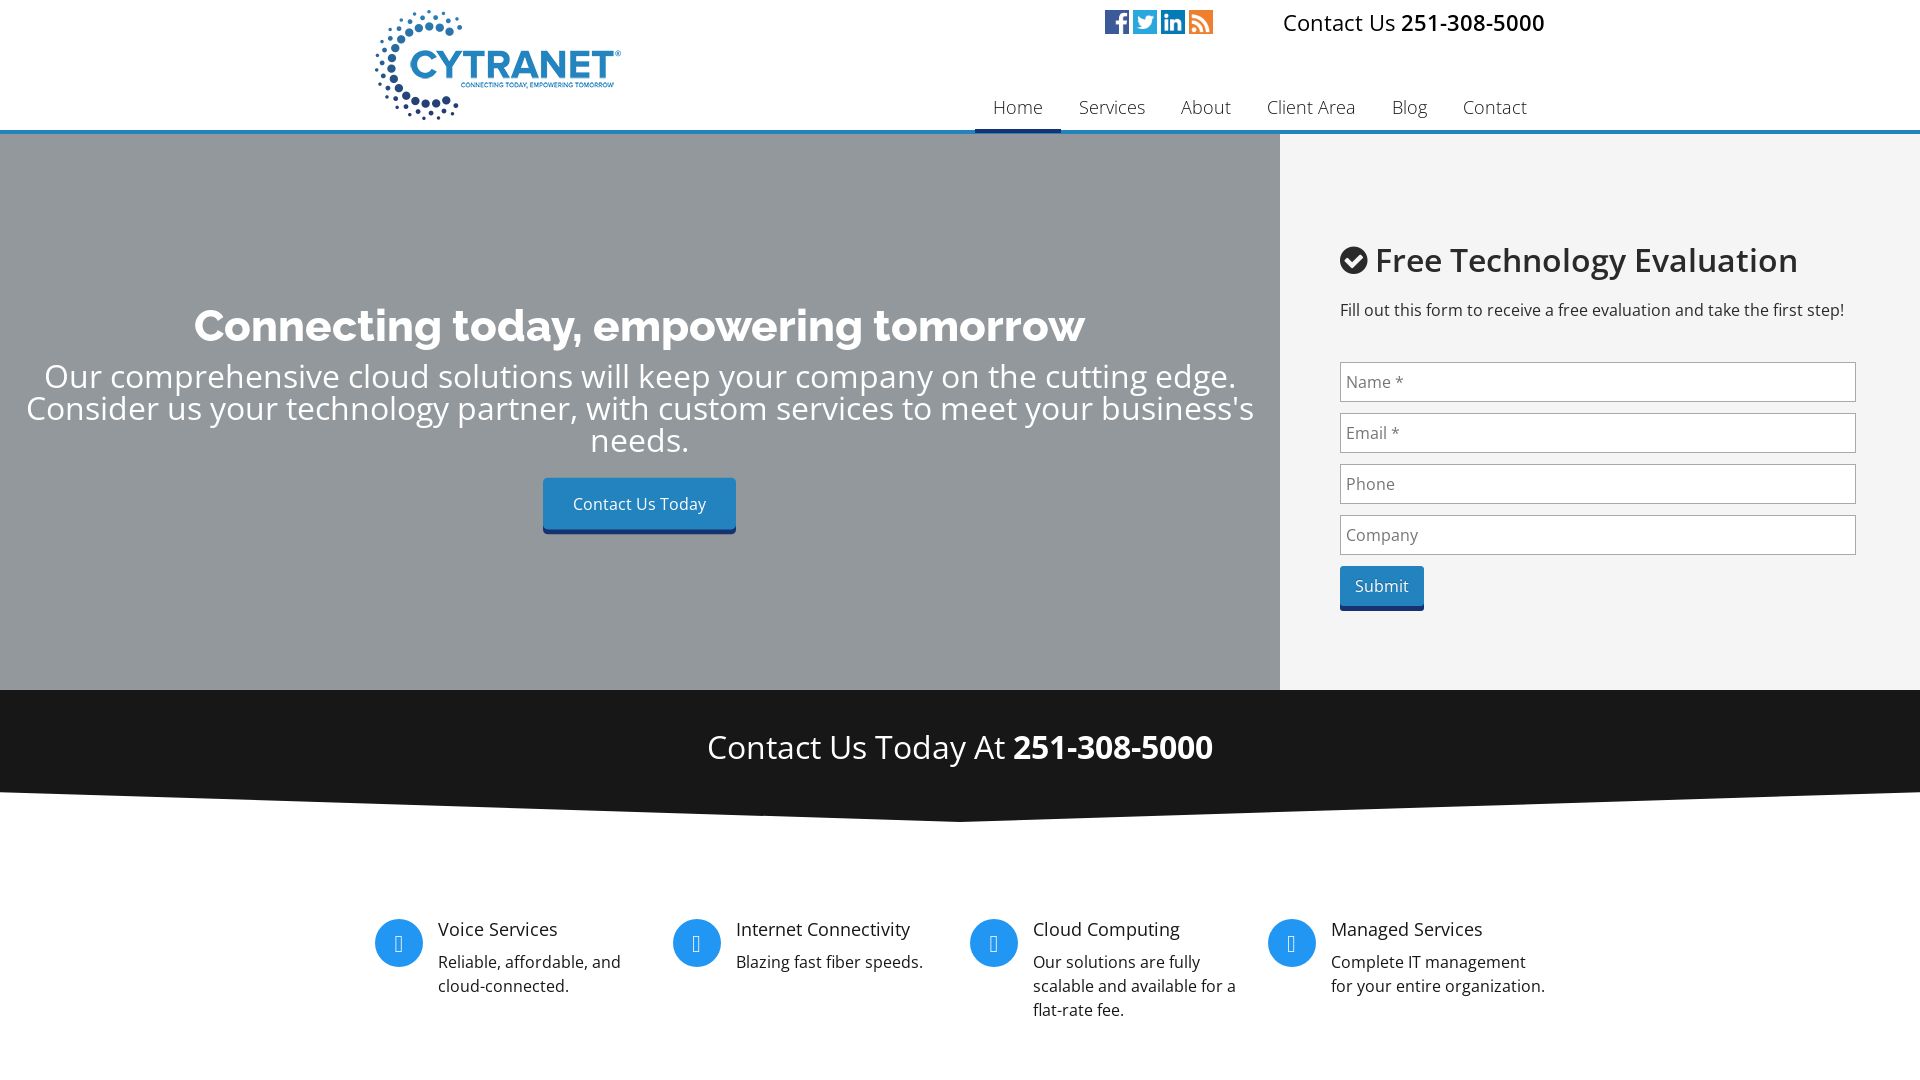 Website status cytranet.com is   ONLINE